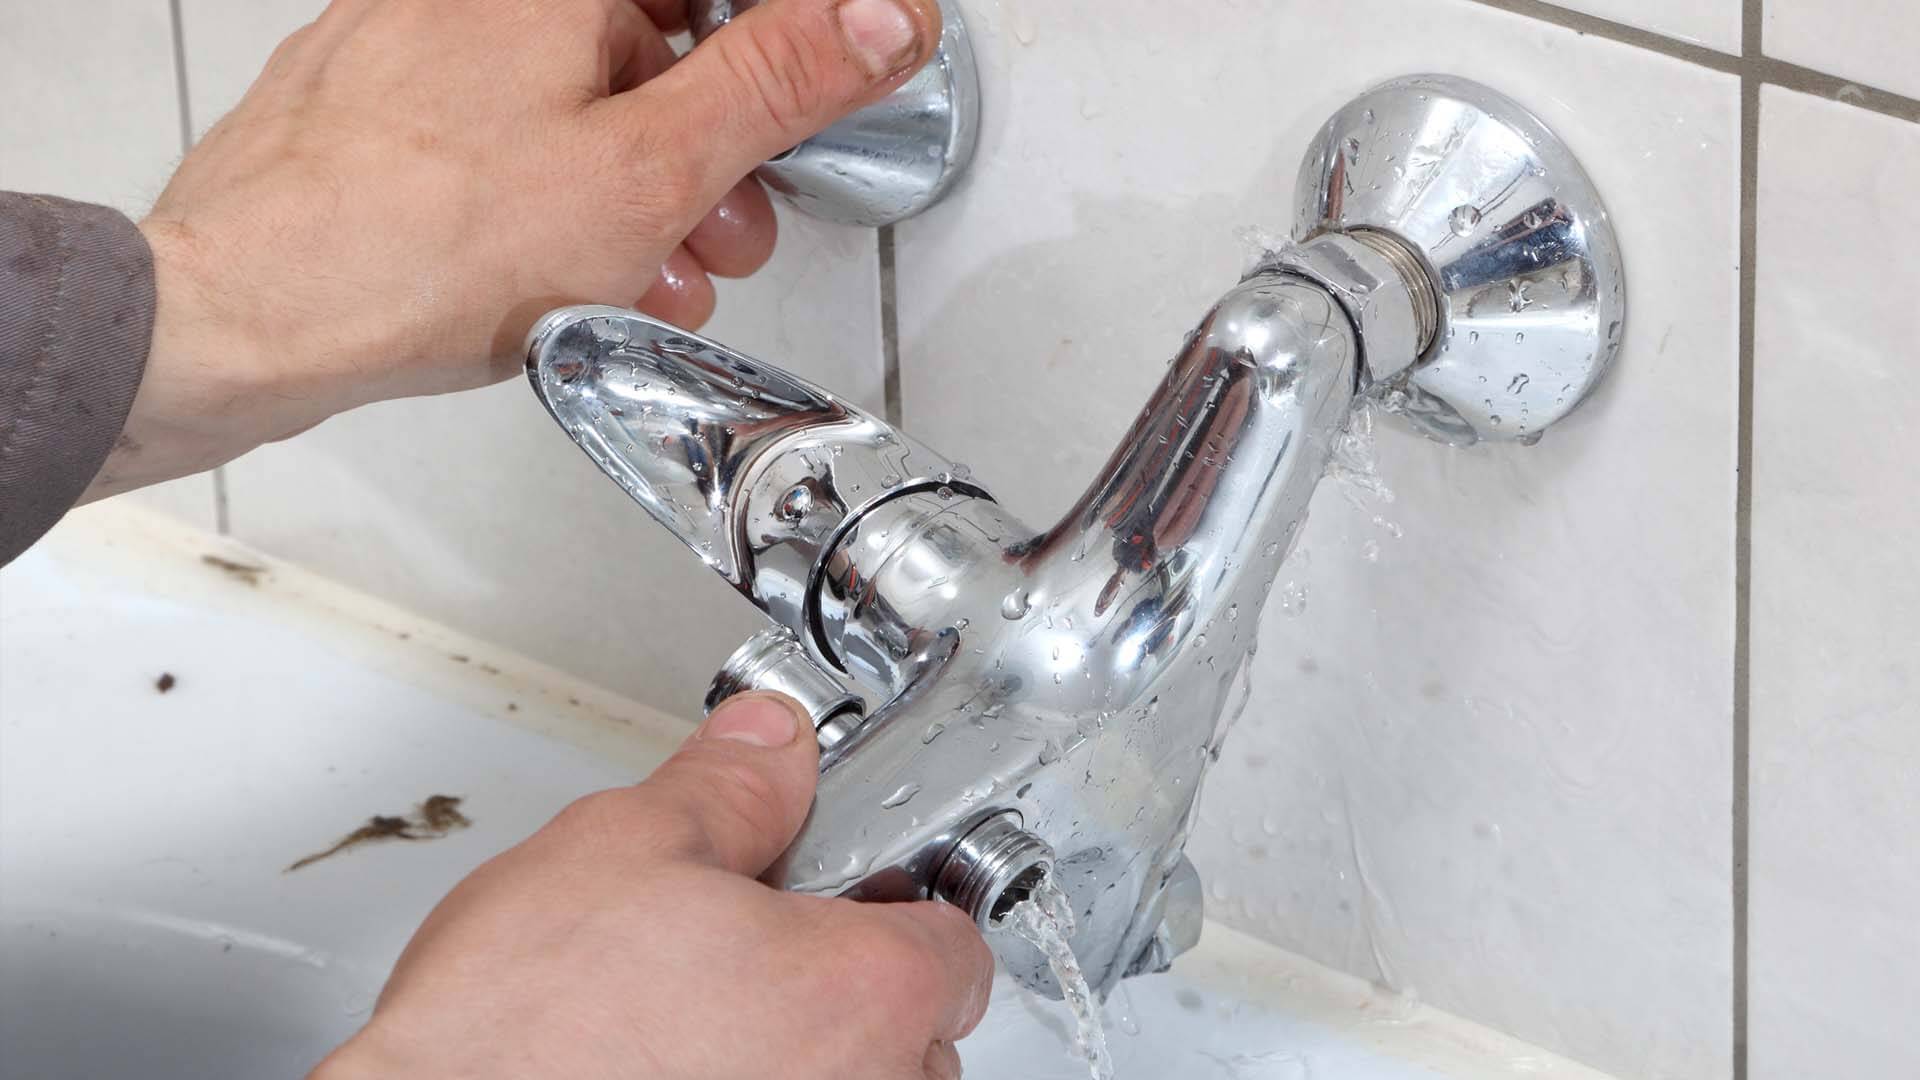 Repairing bathroom faucet at a home in Zephyrhills, FL.